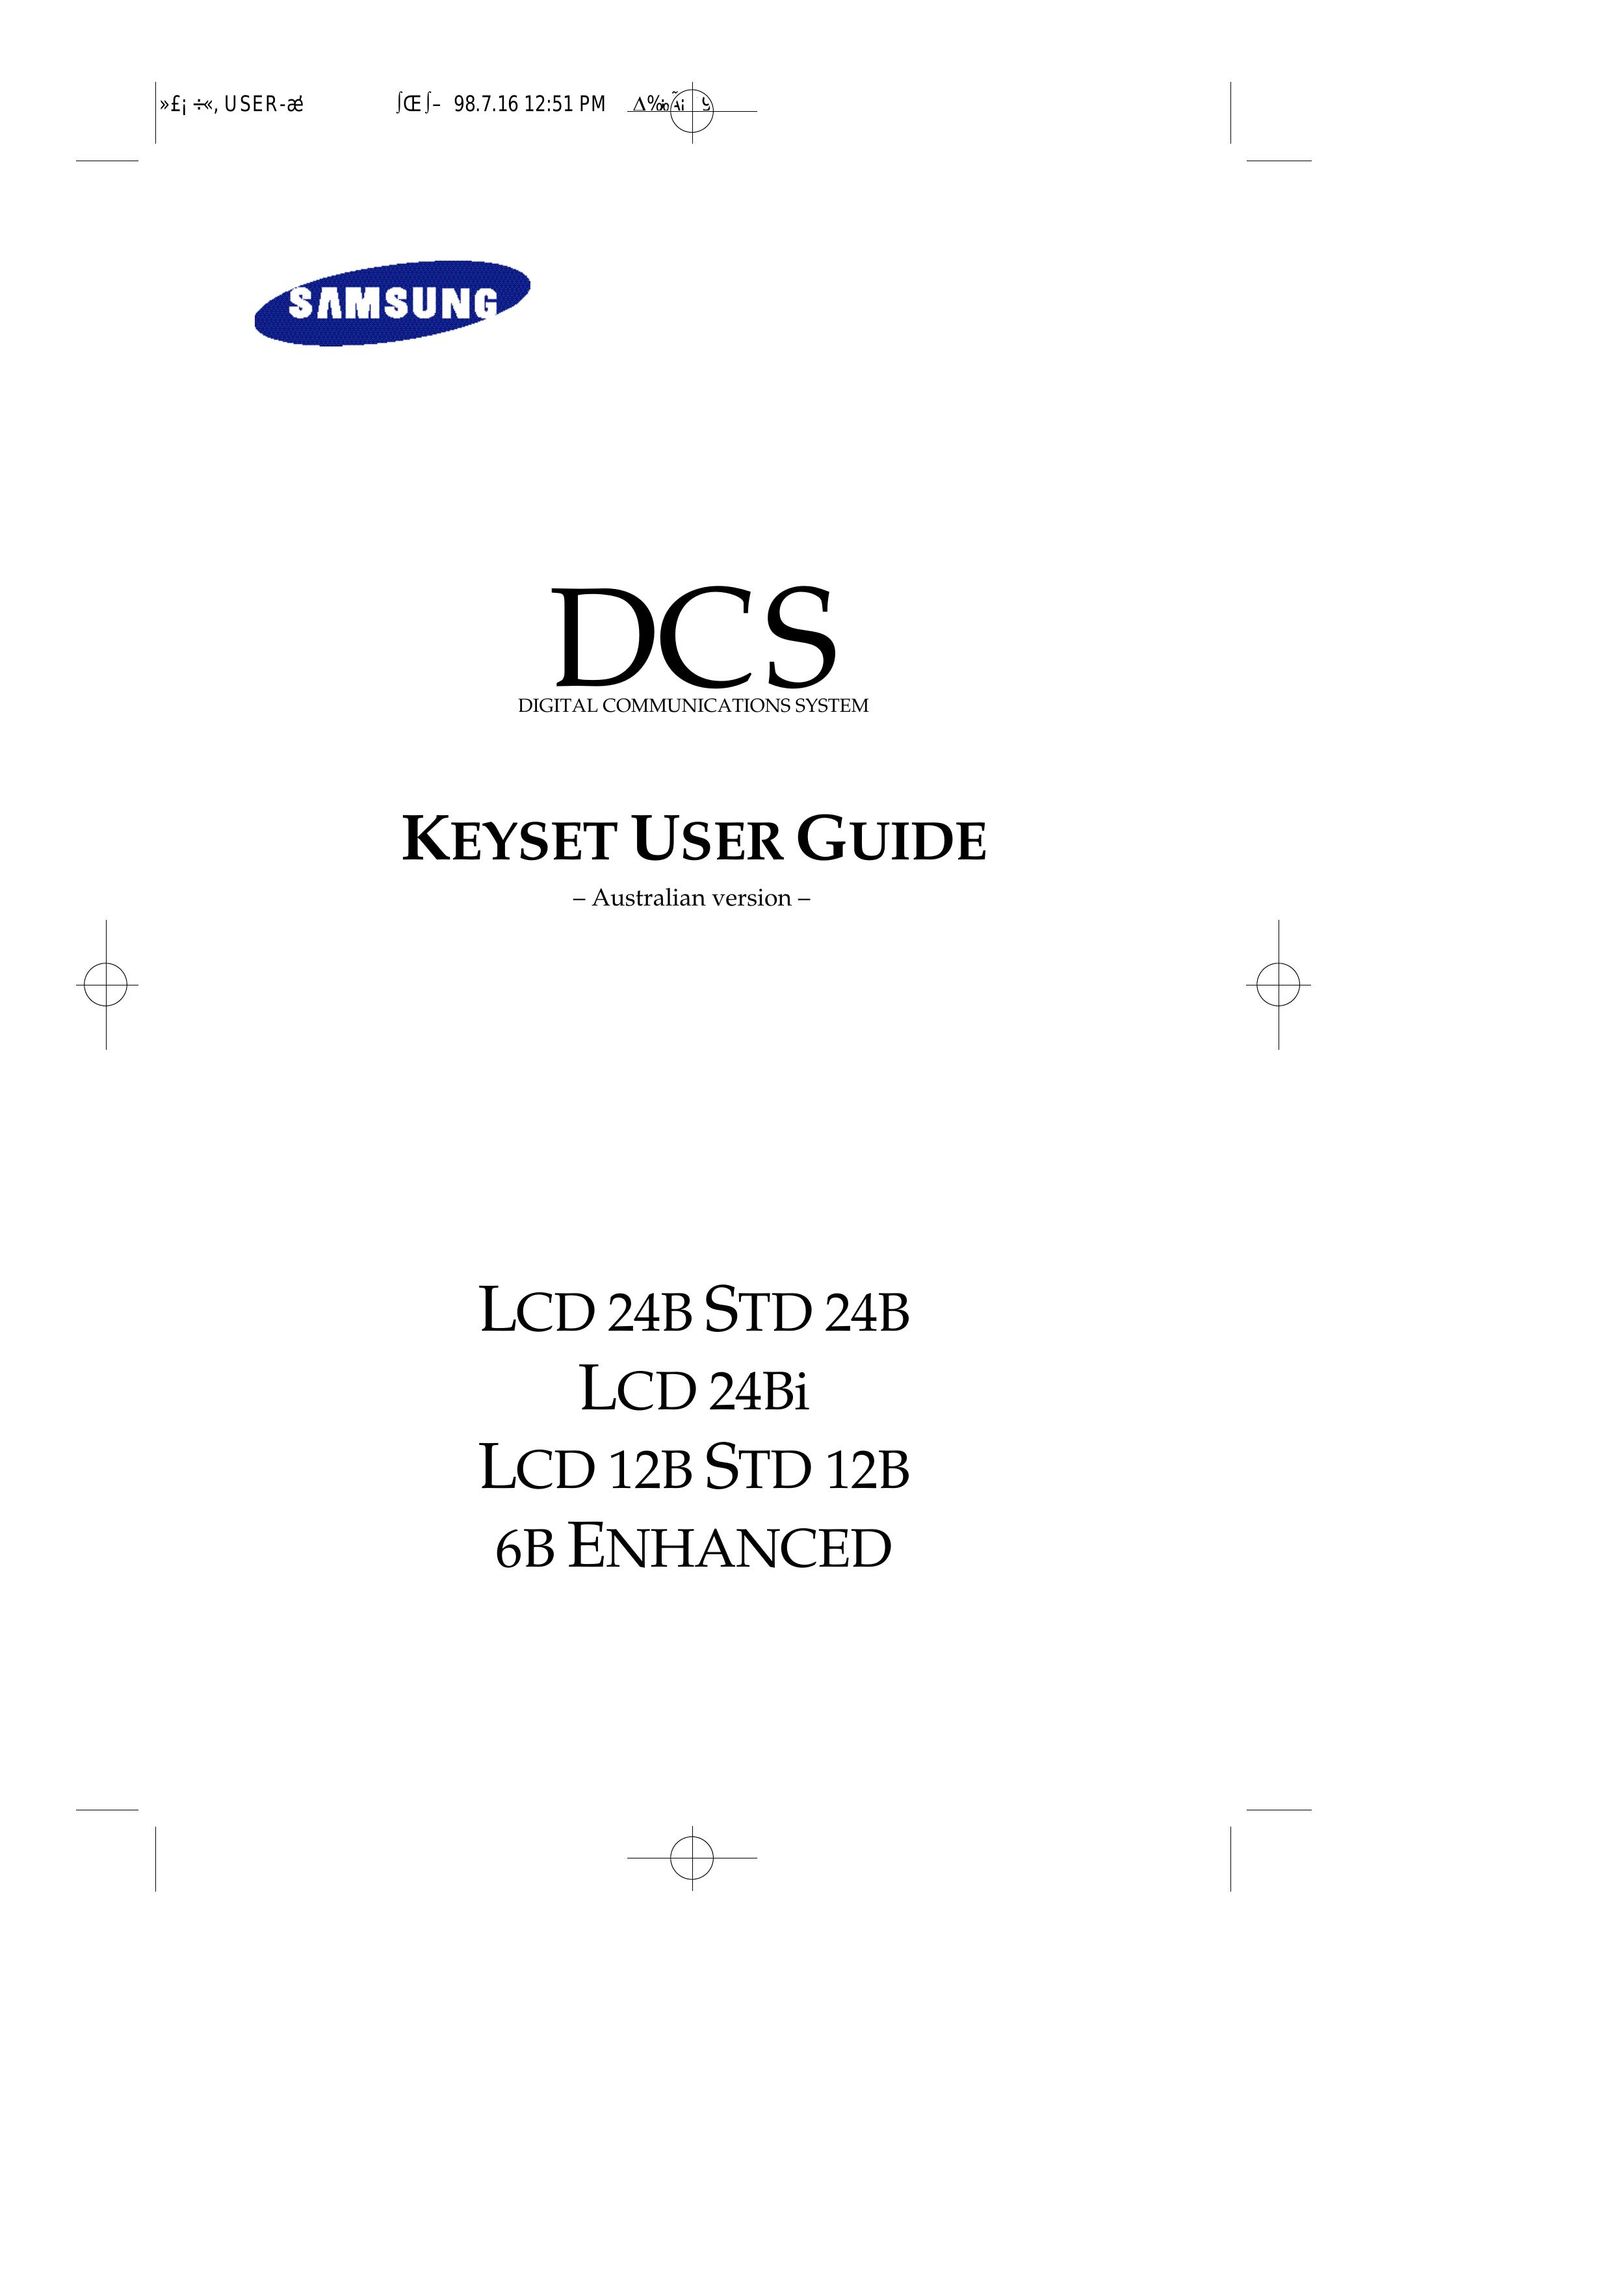 Samsung LCD 12B Answering Machine User Manual